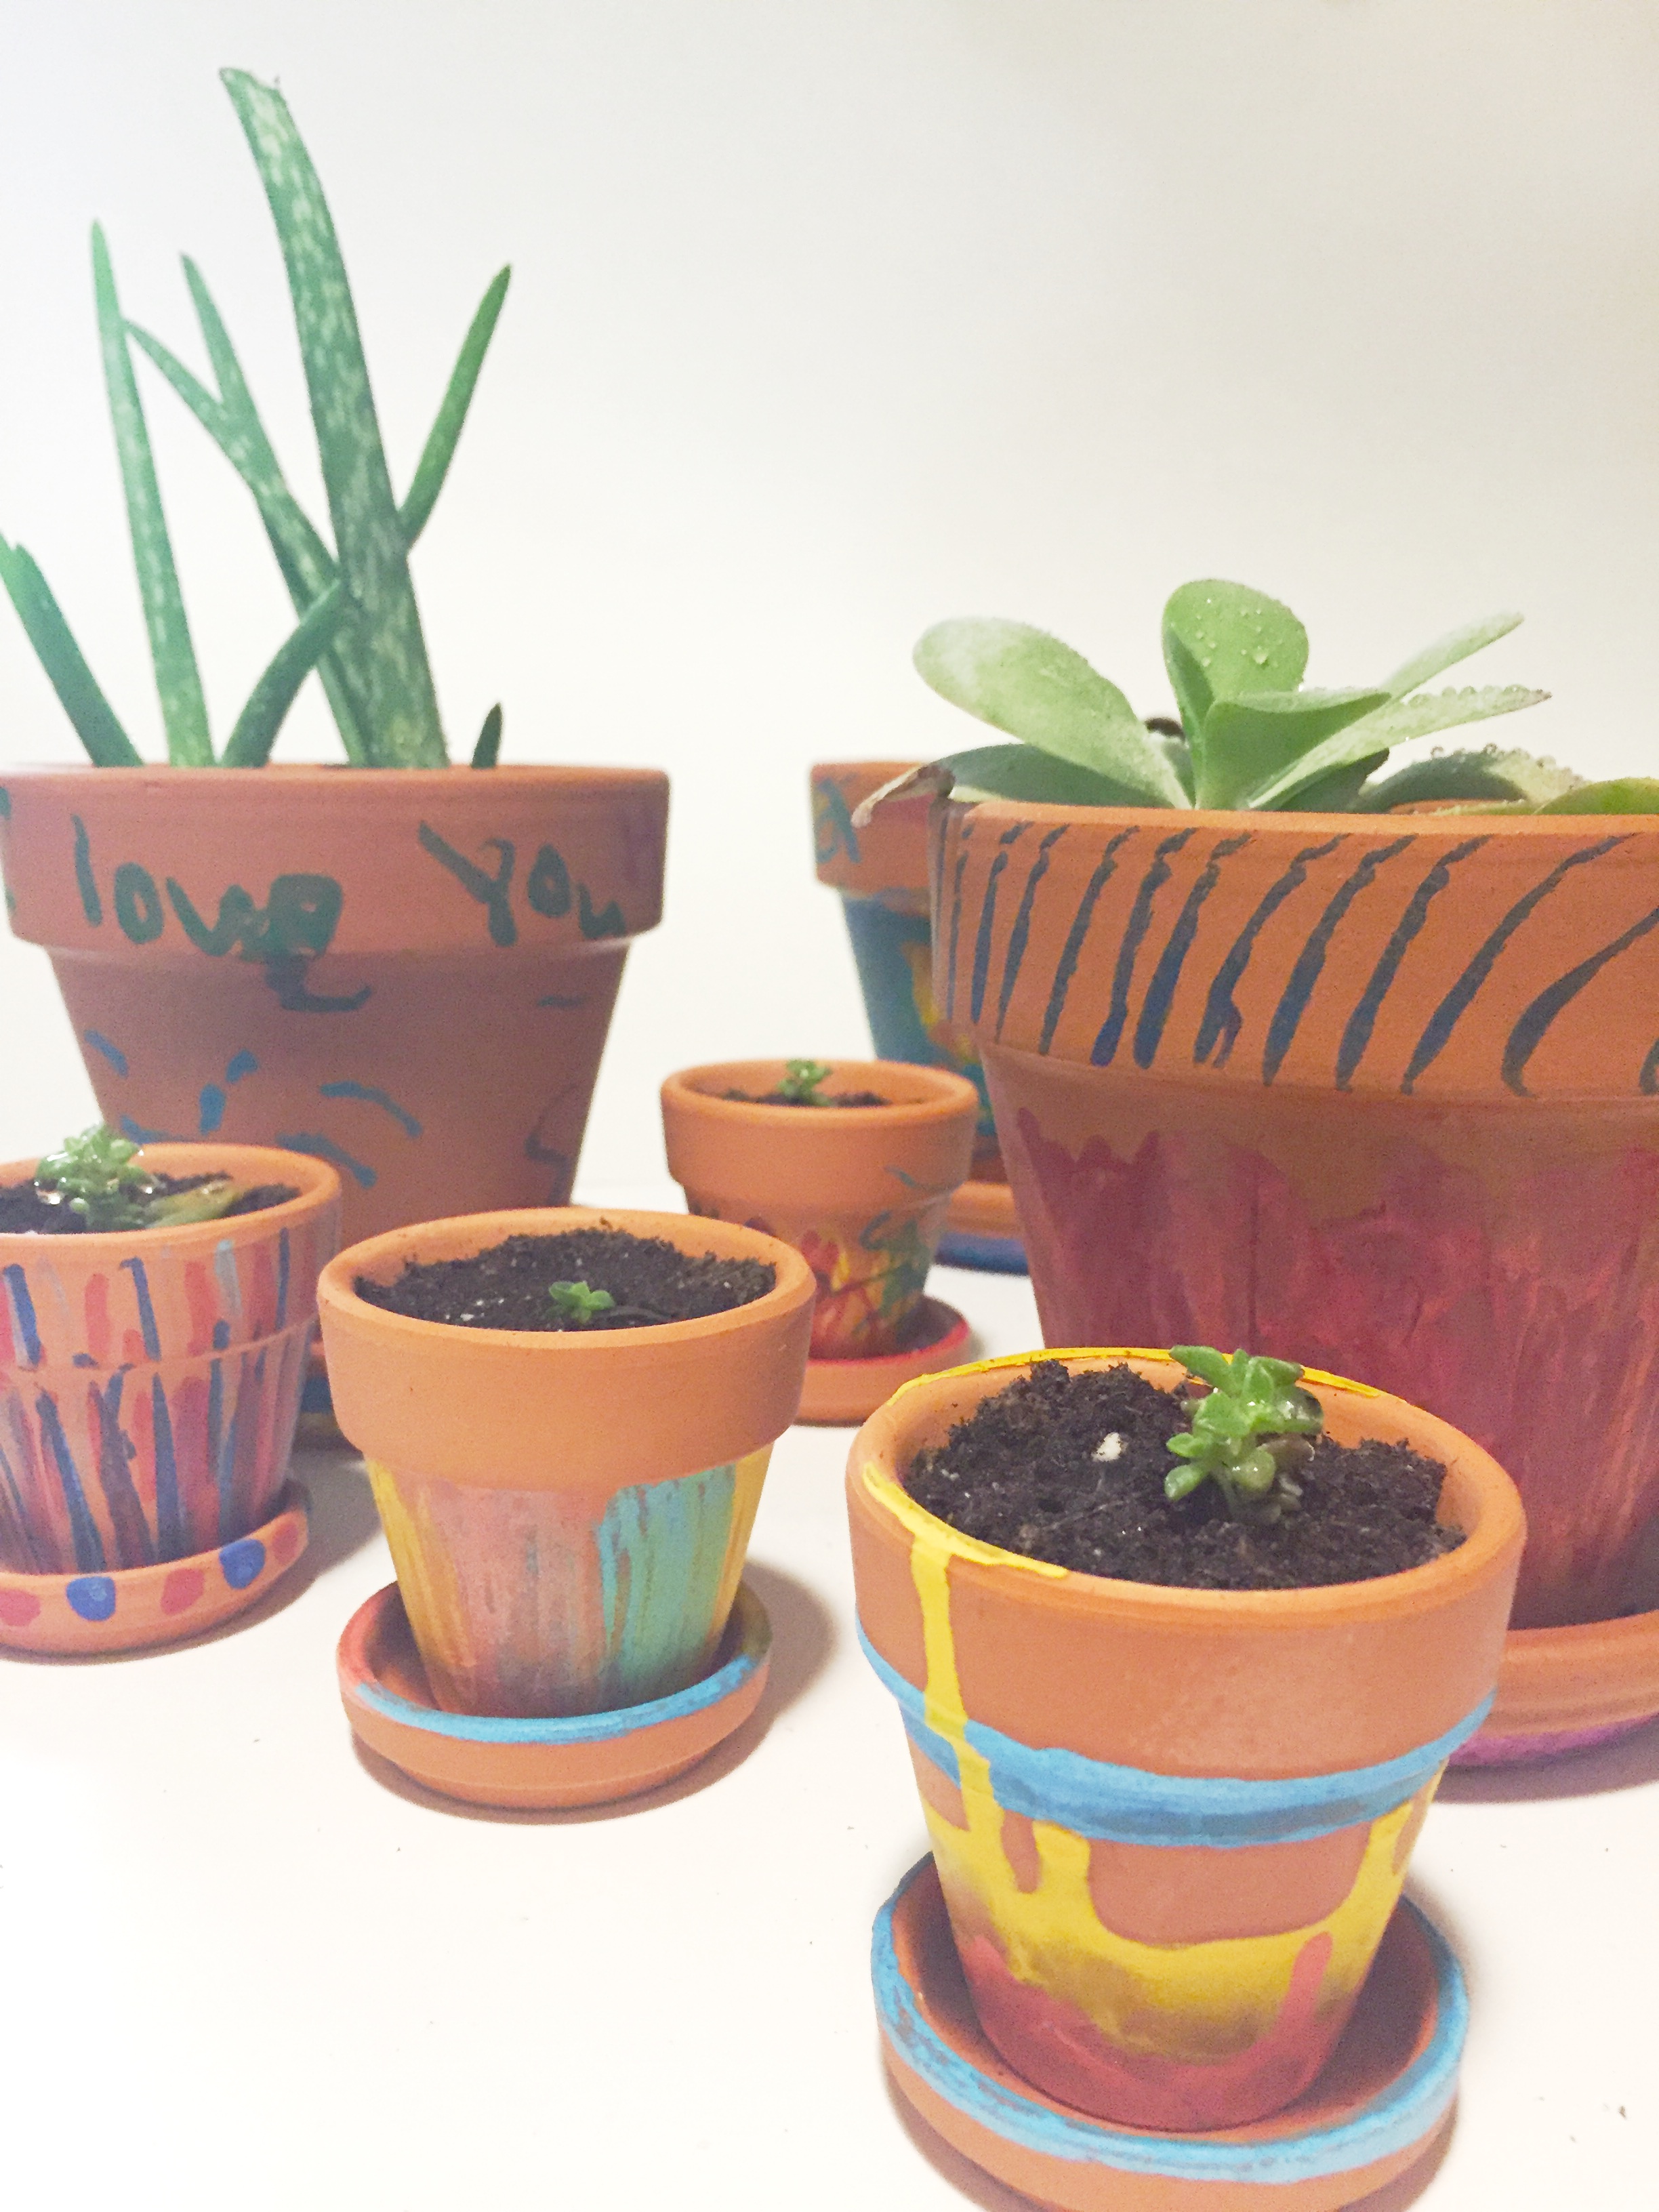 Melting plant pots